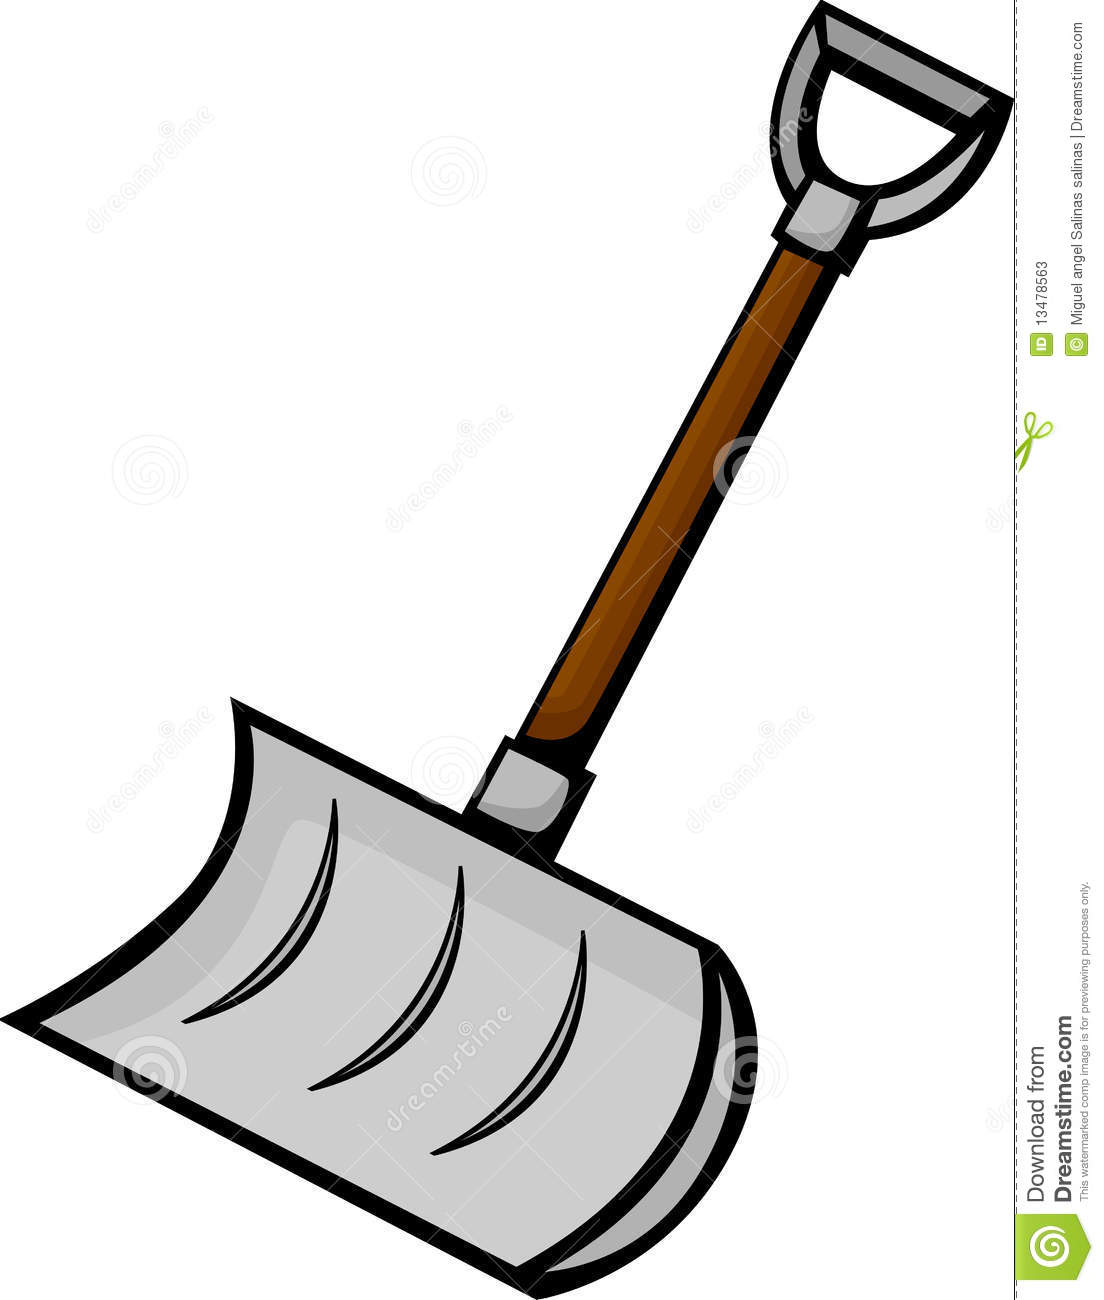 Garden shovel clipart